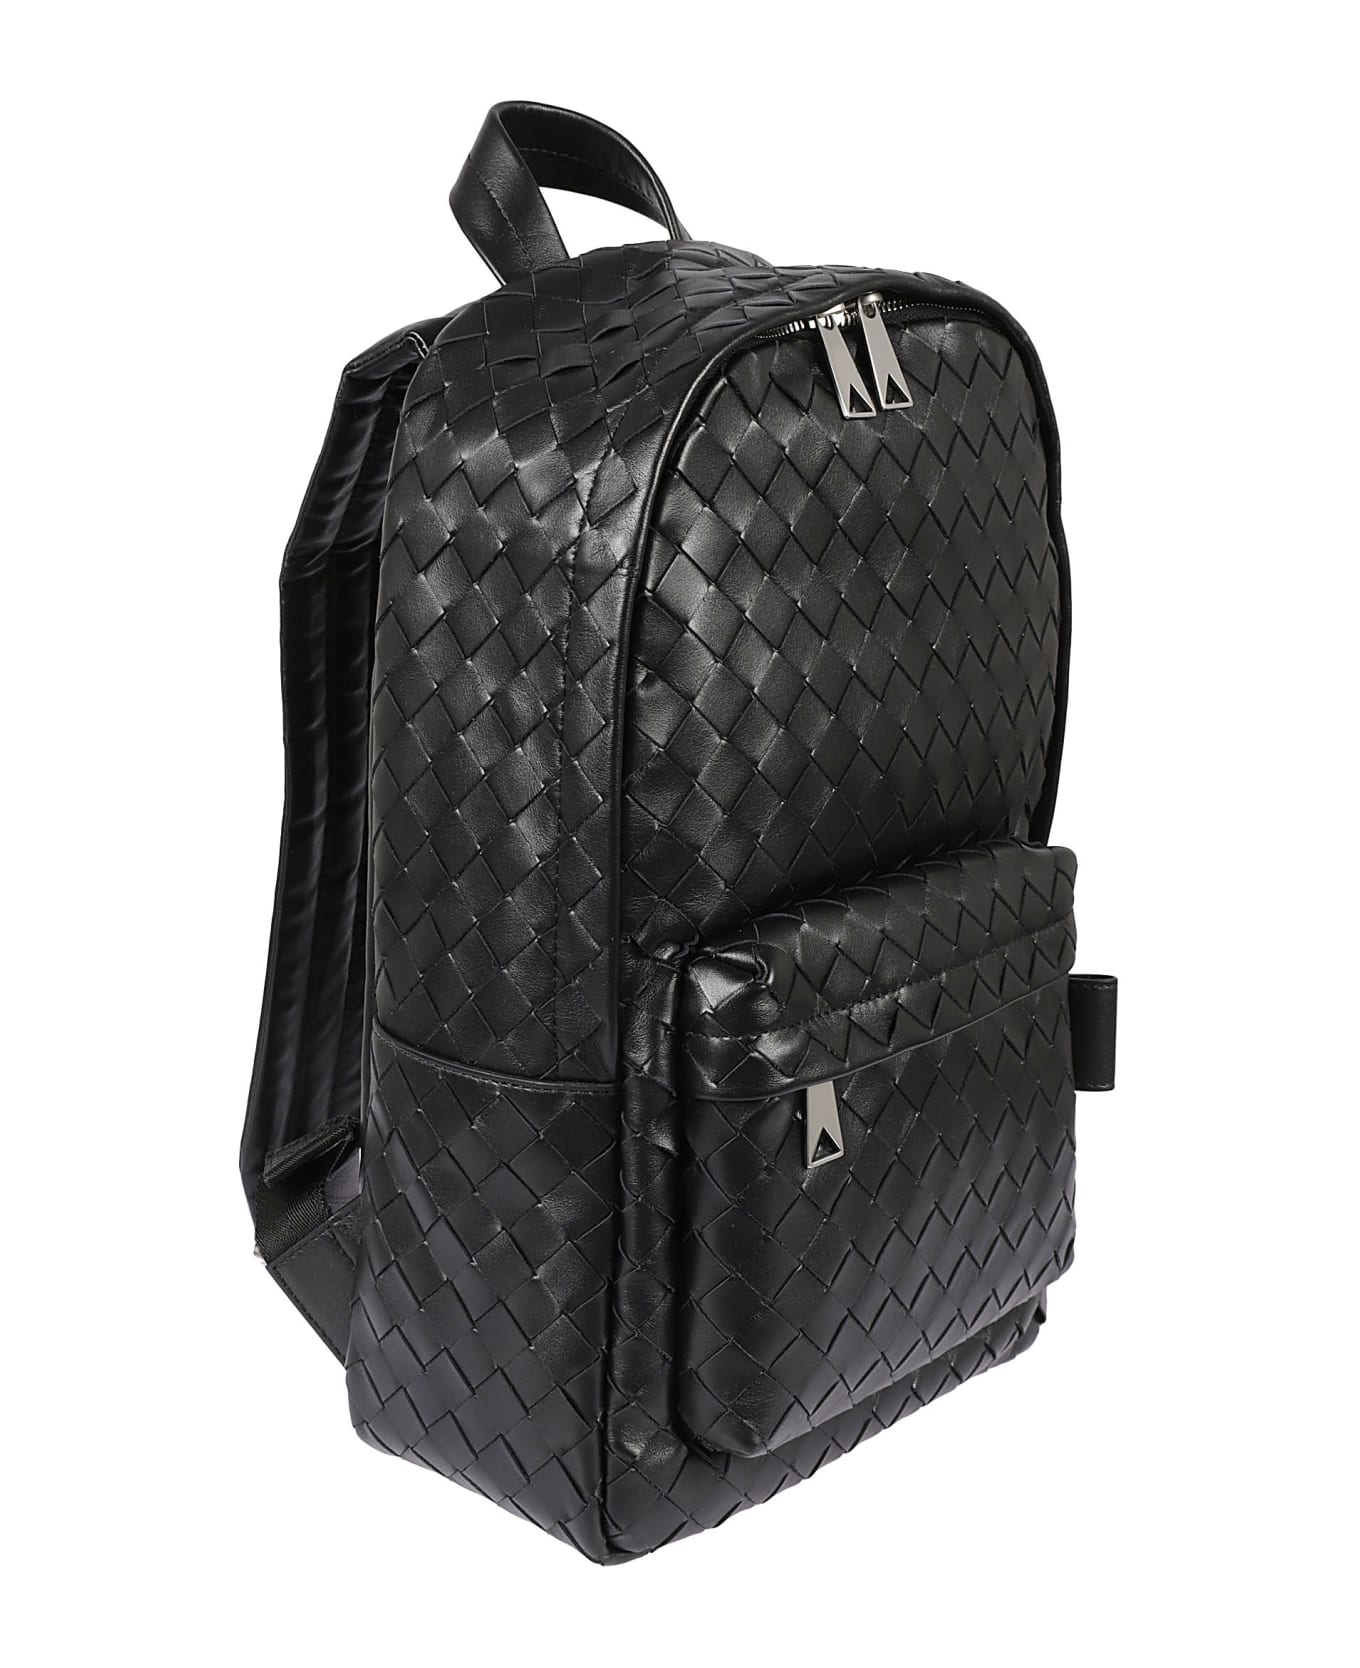 Bottega Veneta Avenue Leather Backpack - Black/Silver